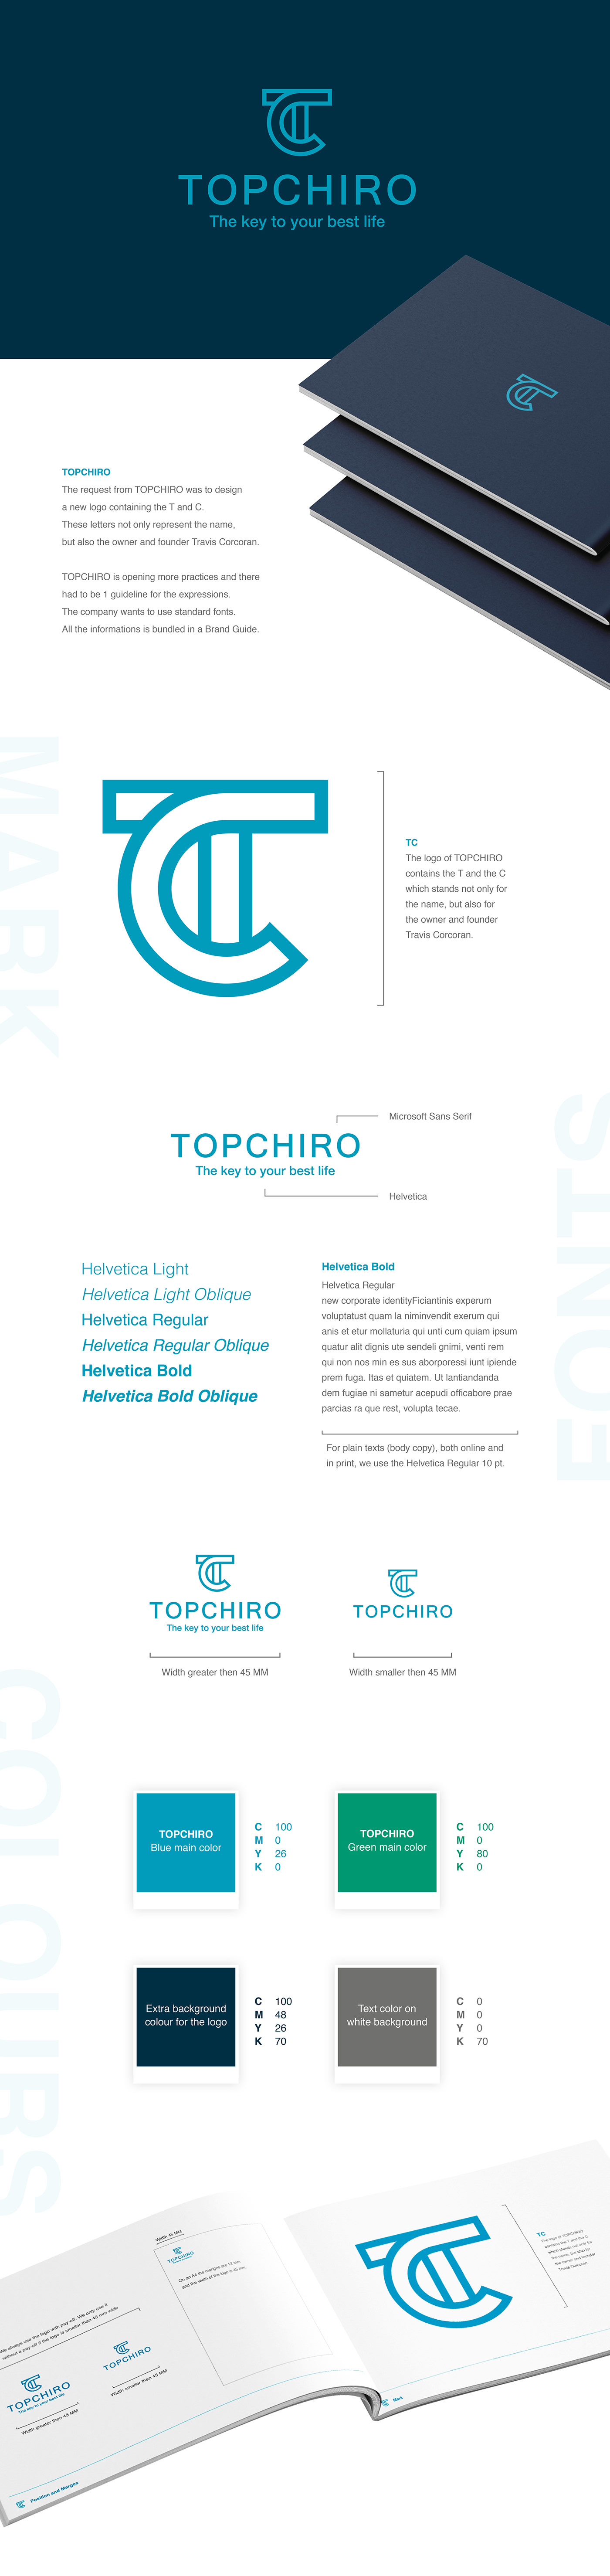 logo branding  identity topchiro Illustrator photoshop InDesign Creativity Proces digital